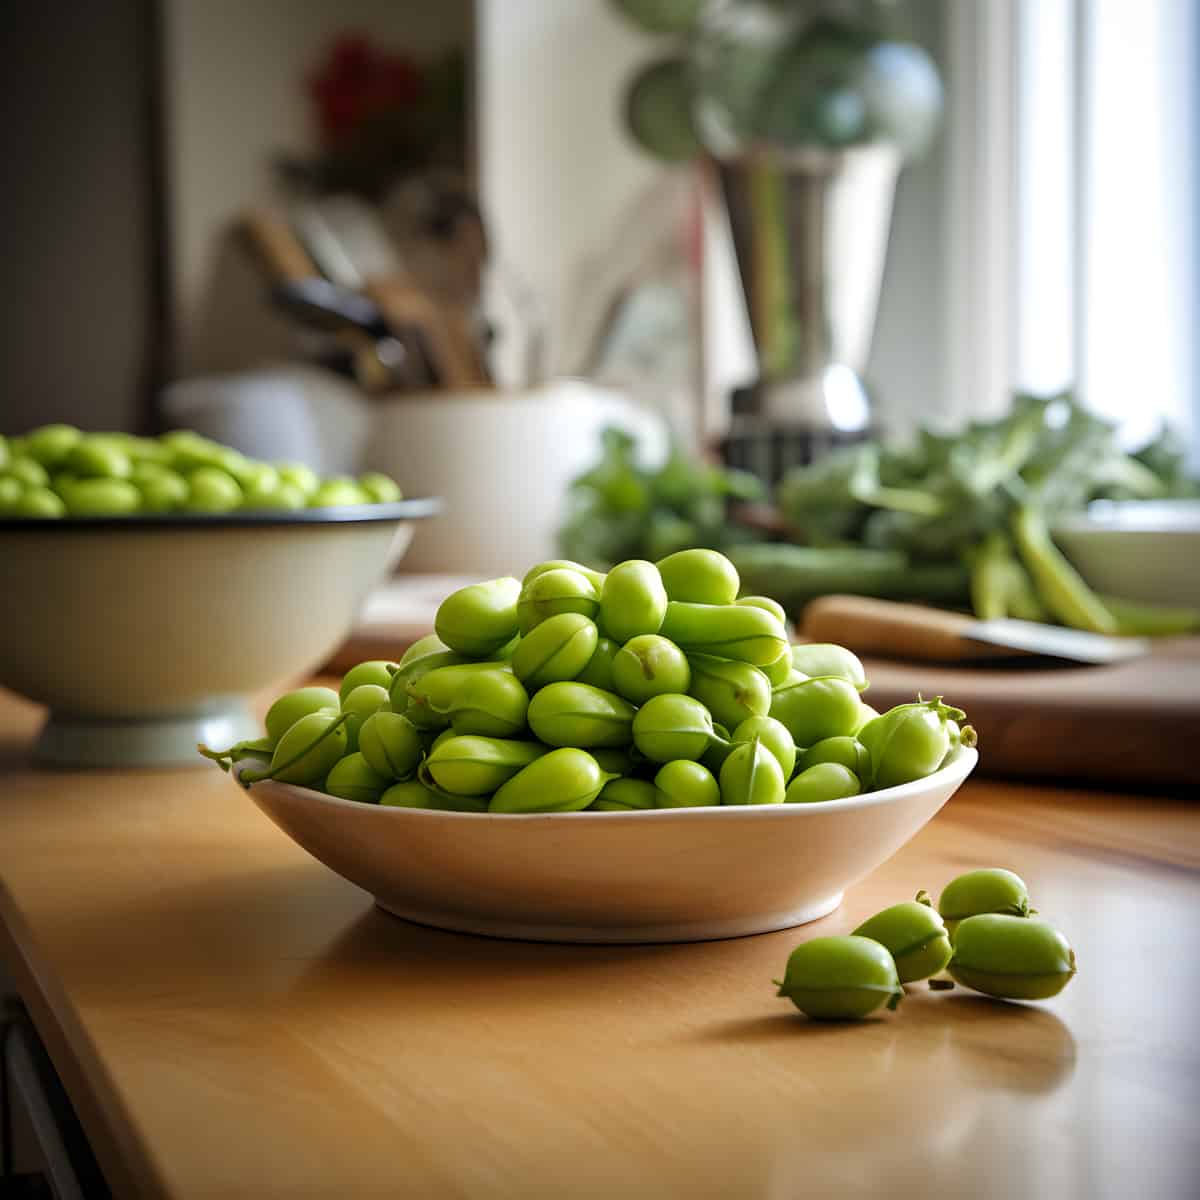 Cajan Peas on a kitchen counter